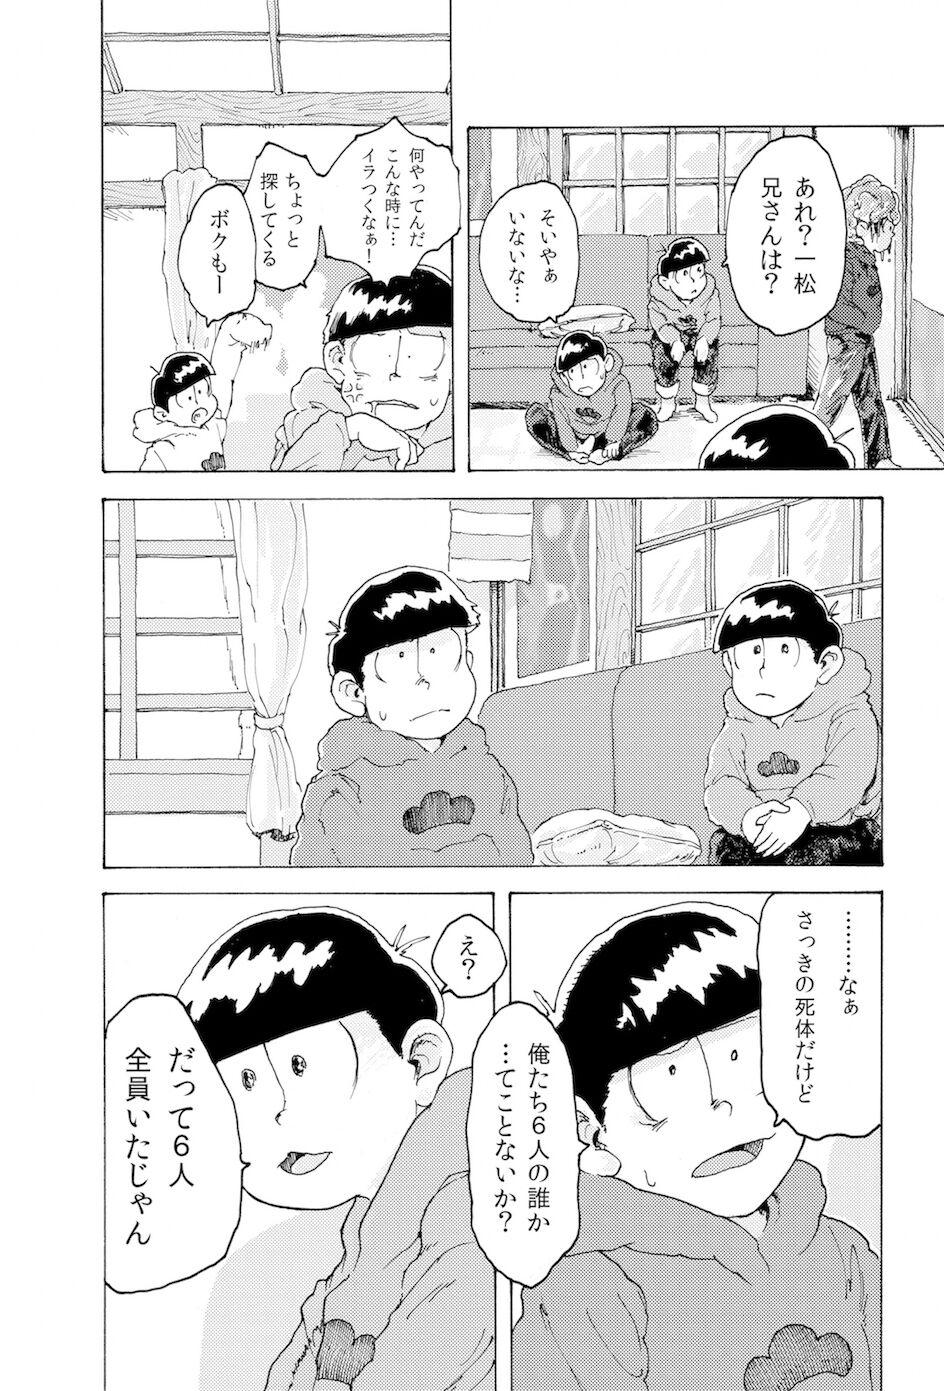 Hot Chicks Fucking [Koshigerunasunibusu] WEB Sairoku [R18G] 'AIN'T SIX IS DEATH' - Osomatsu san Hunk - Page 11